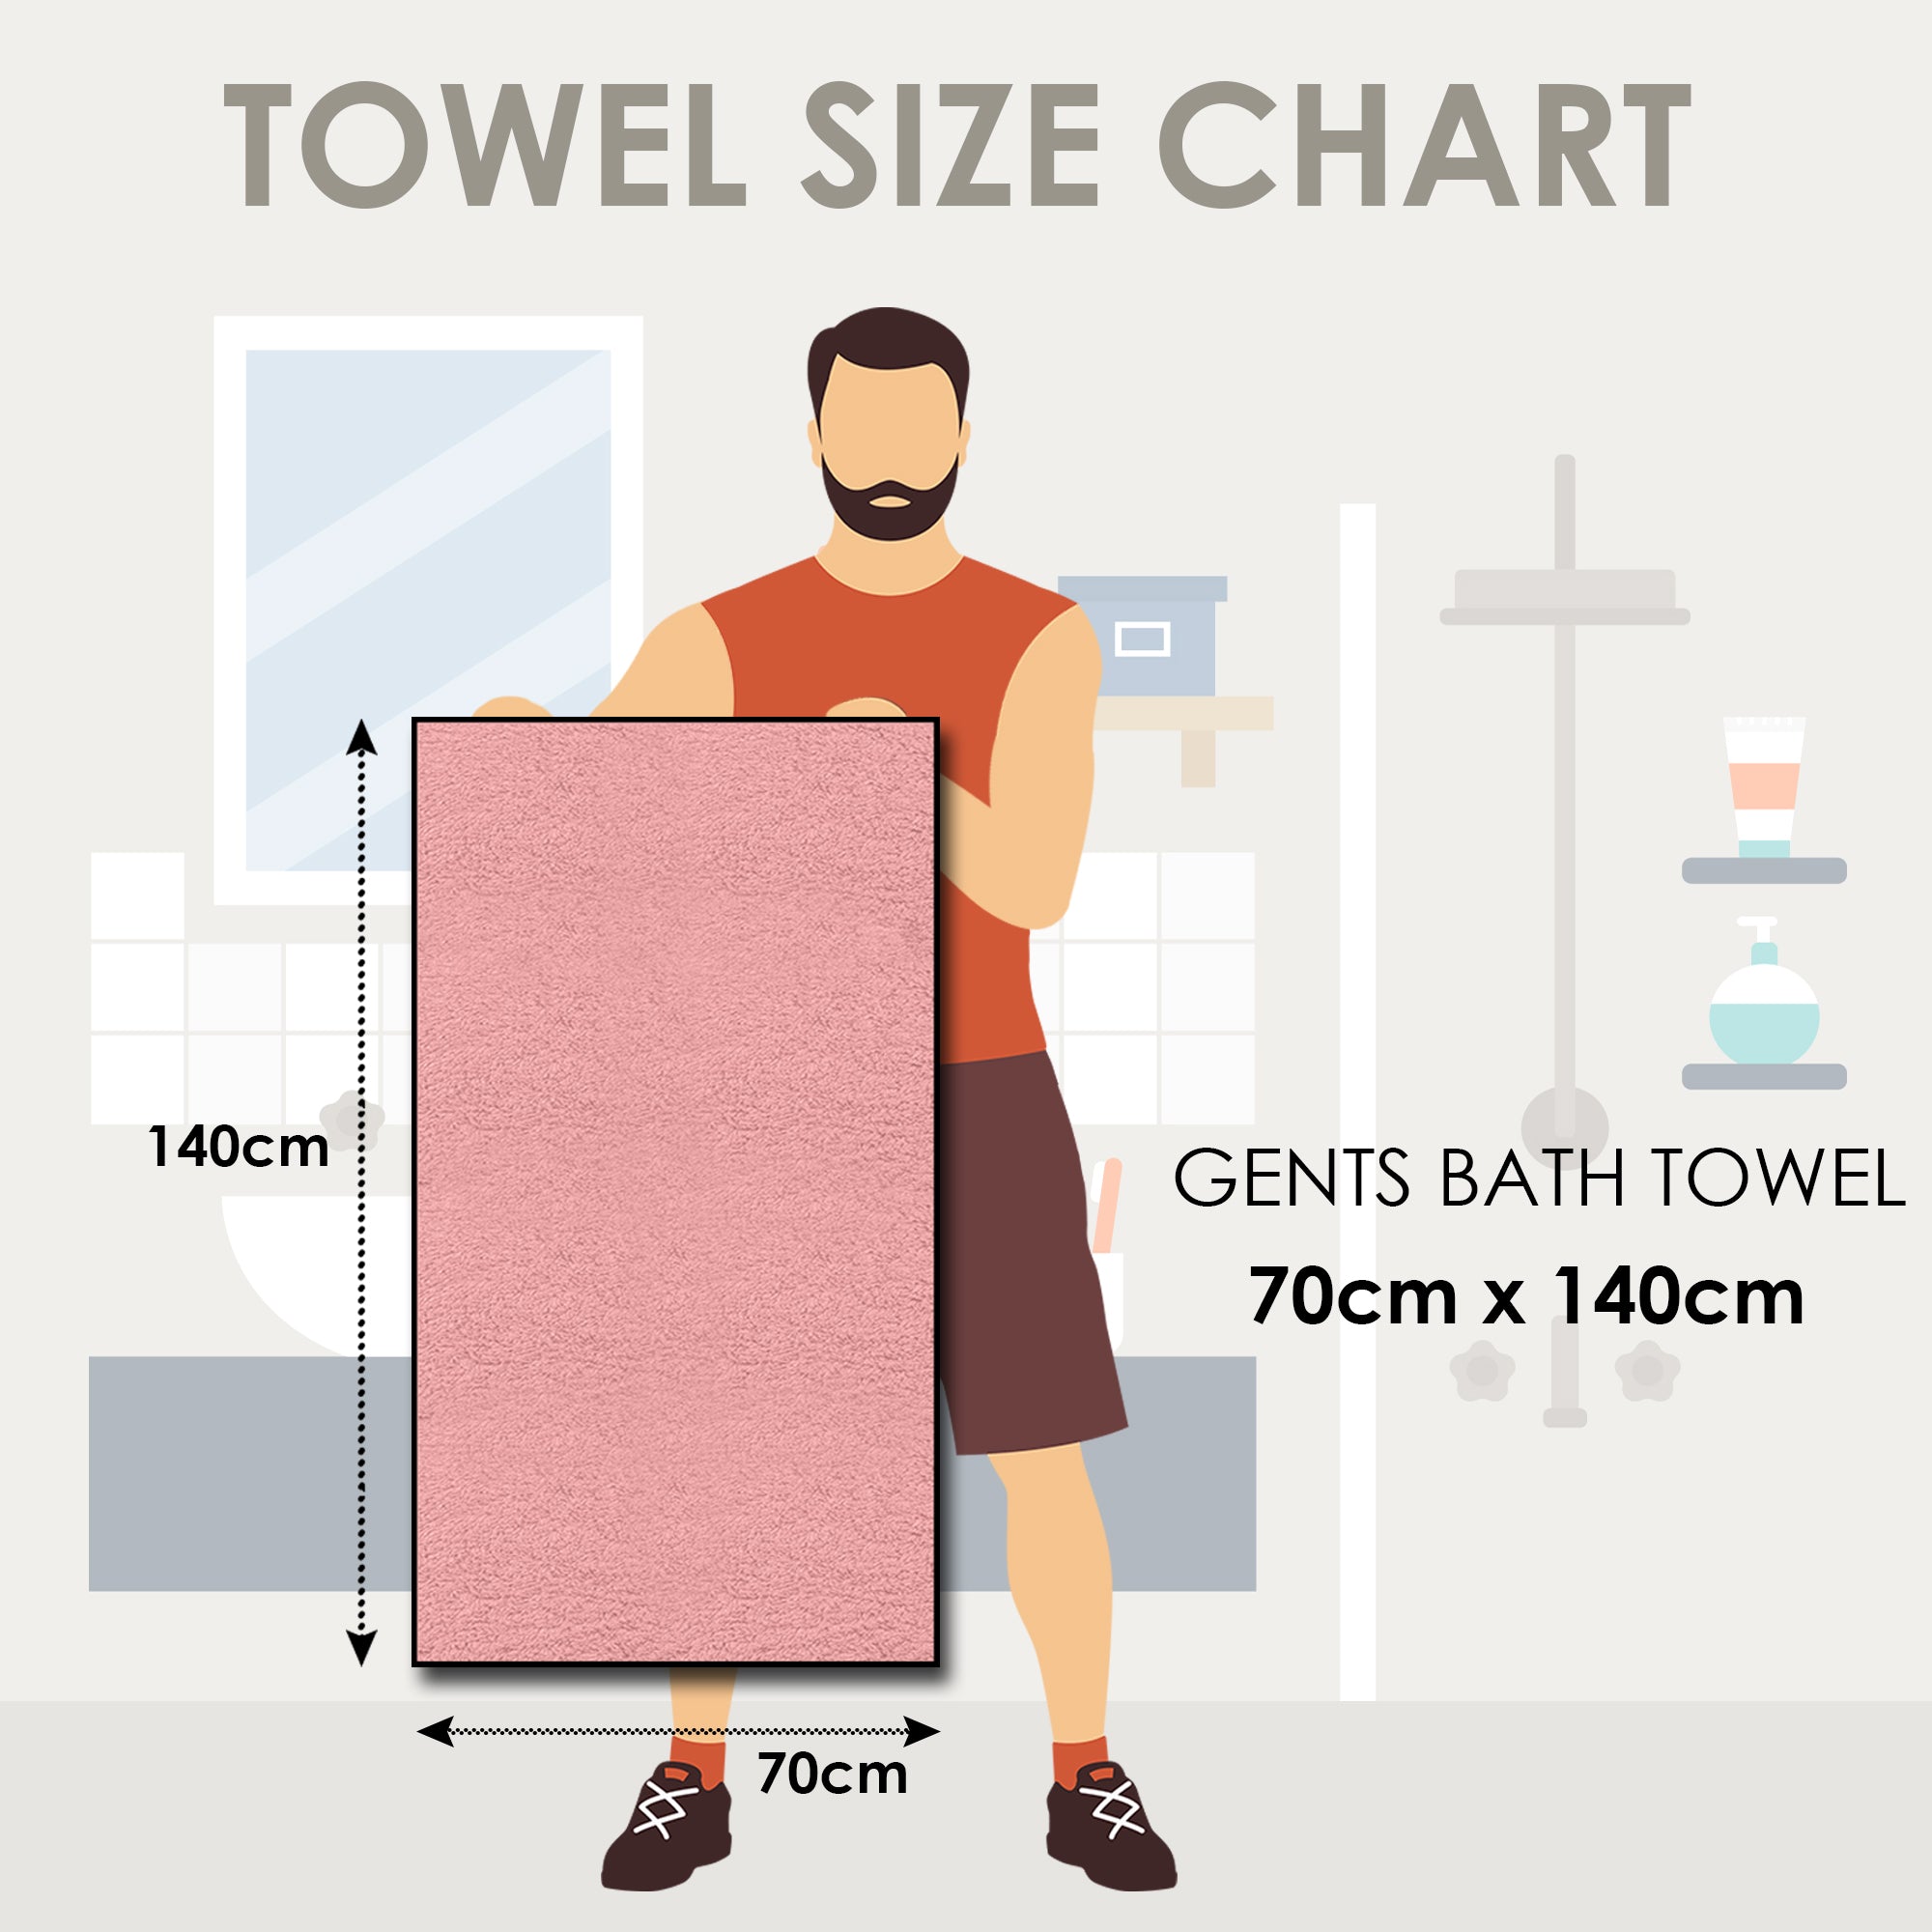 Story@Home 3 Units 100% Cotton Bath Towels - Green